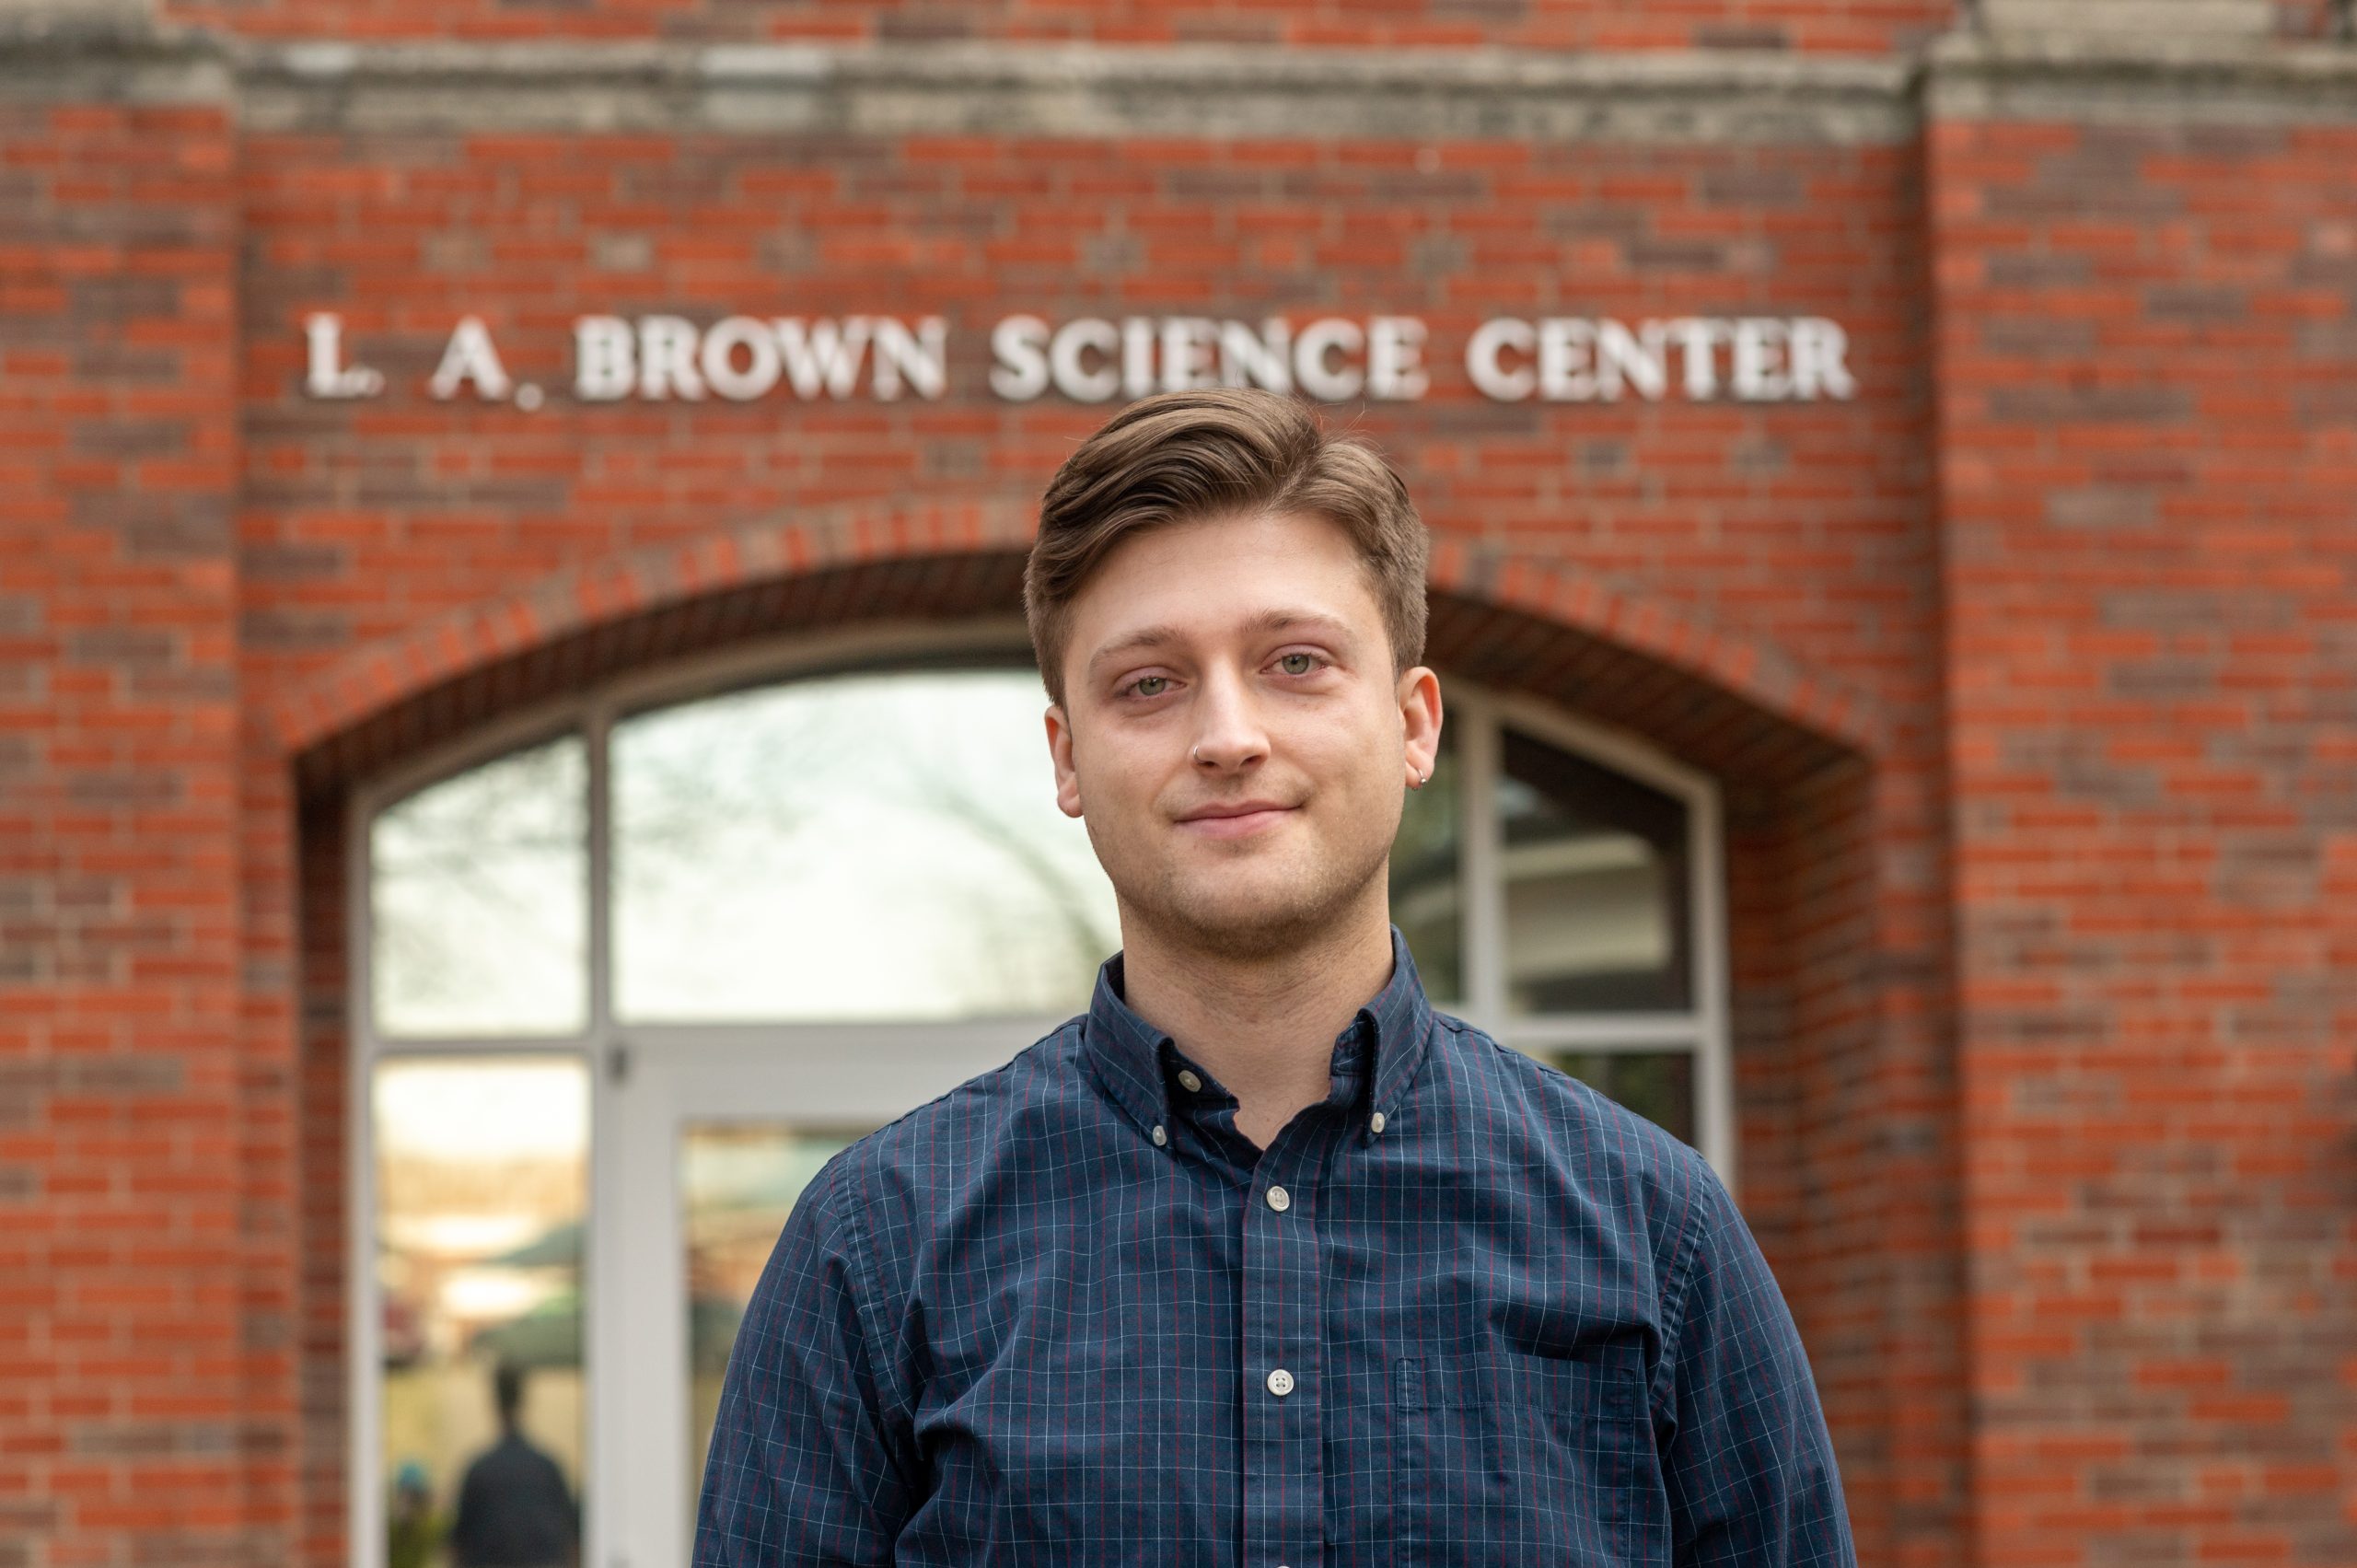 Transylvania physics grad becomes lab coordinator, ‘hero of the story’